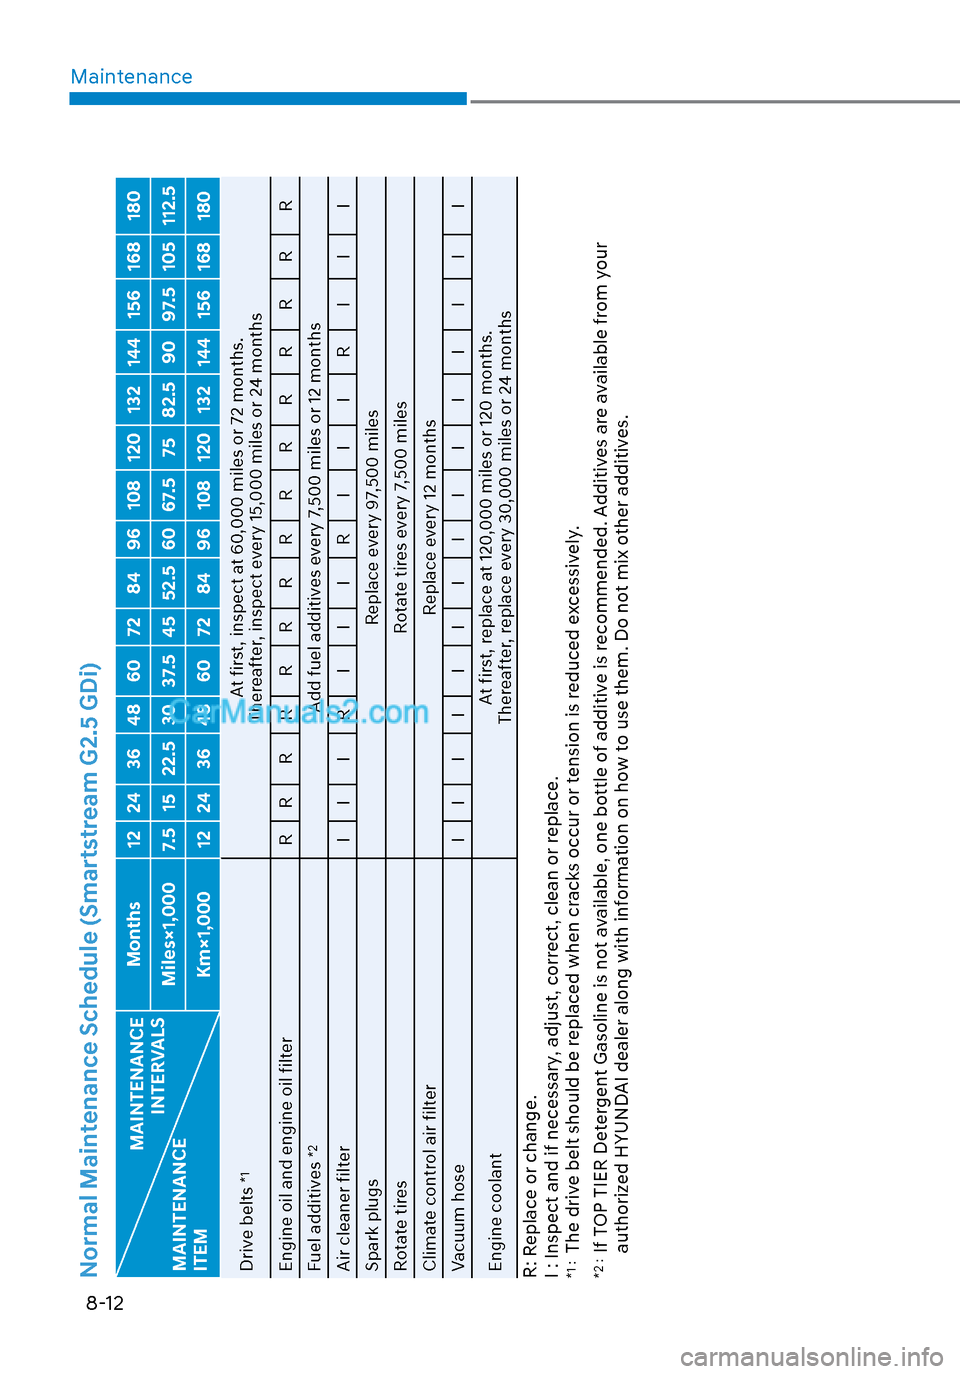 Hyundai Sonata 2020 User Guide Maintenance8-12
Normal Maintenance Schedule (Smartstream G2.5 GDi)
MAINTENANCE  INTERVALS
MAINTENANCE 
ITEM Months 12 24 36 48 60 72 84 96 108 120 132 144 156 168 180
Miles×1,000 7.5 15 22.5 30 37.5 